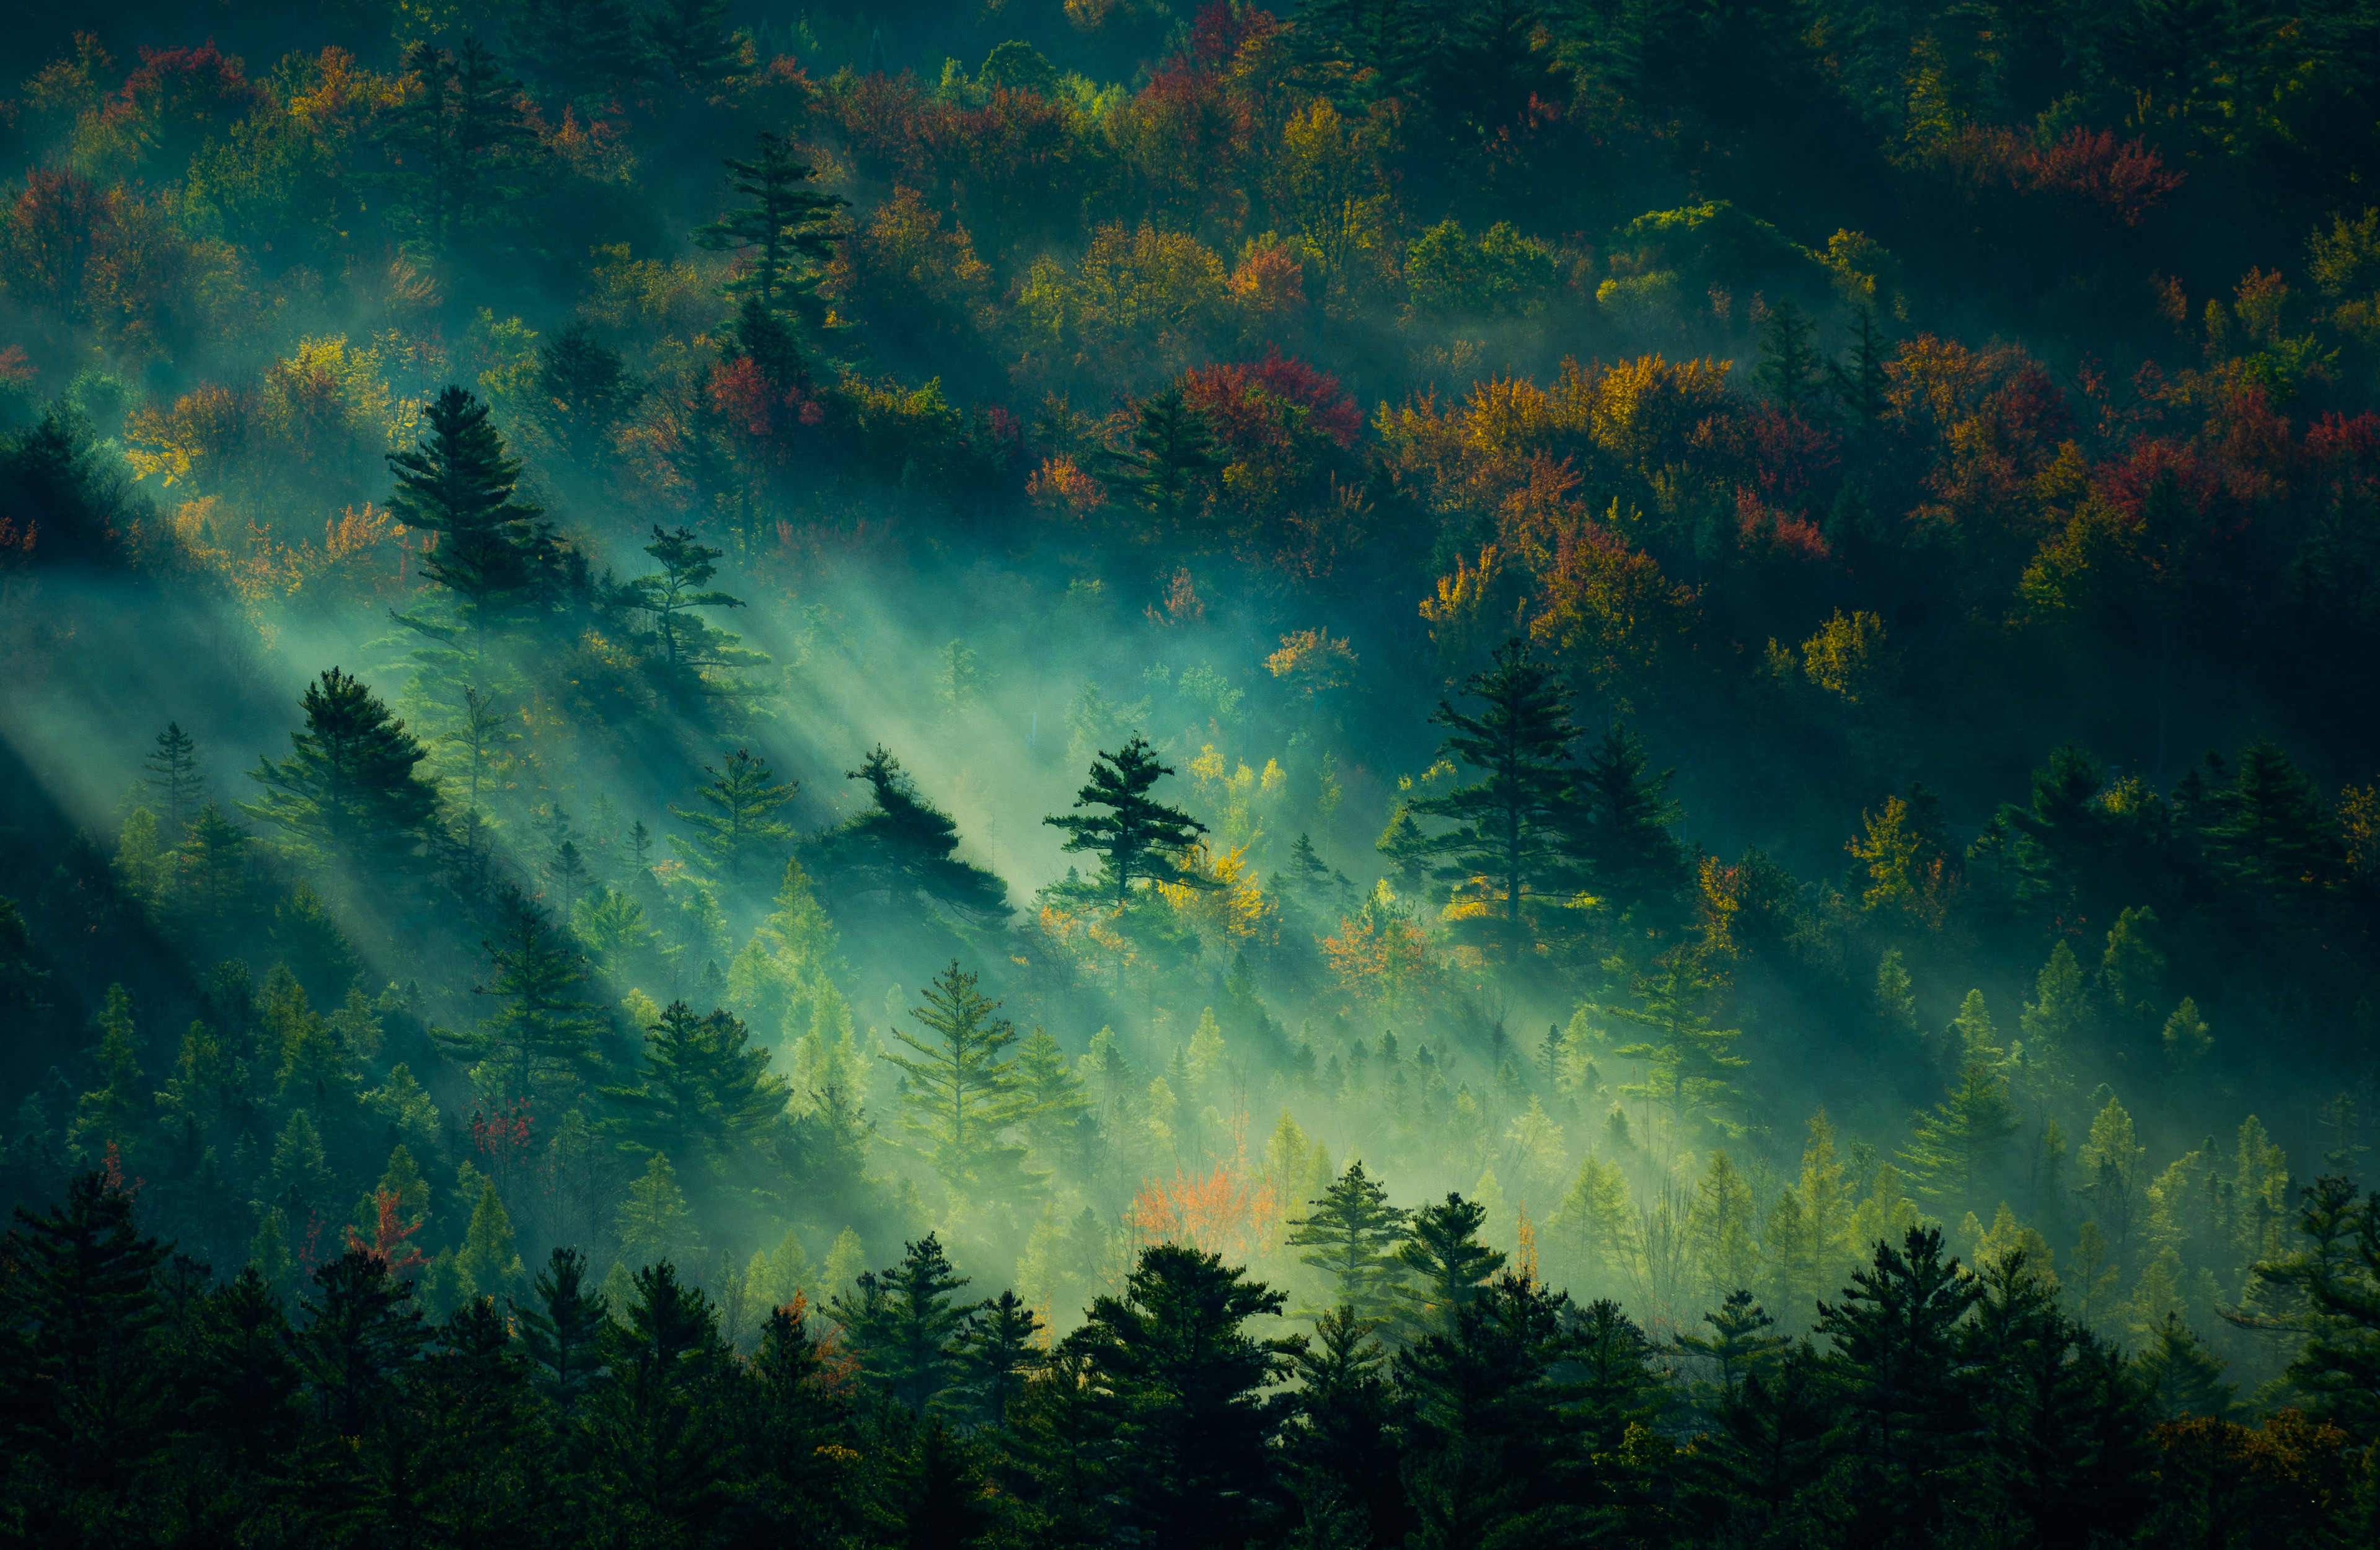 Nature Forest 4k Ultra HD Wallpaper by Derek Kind